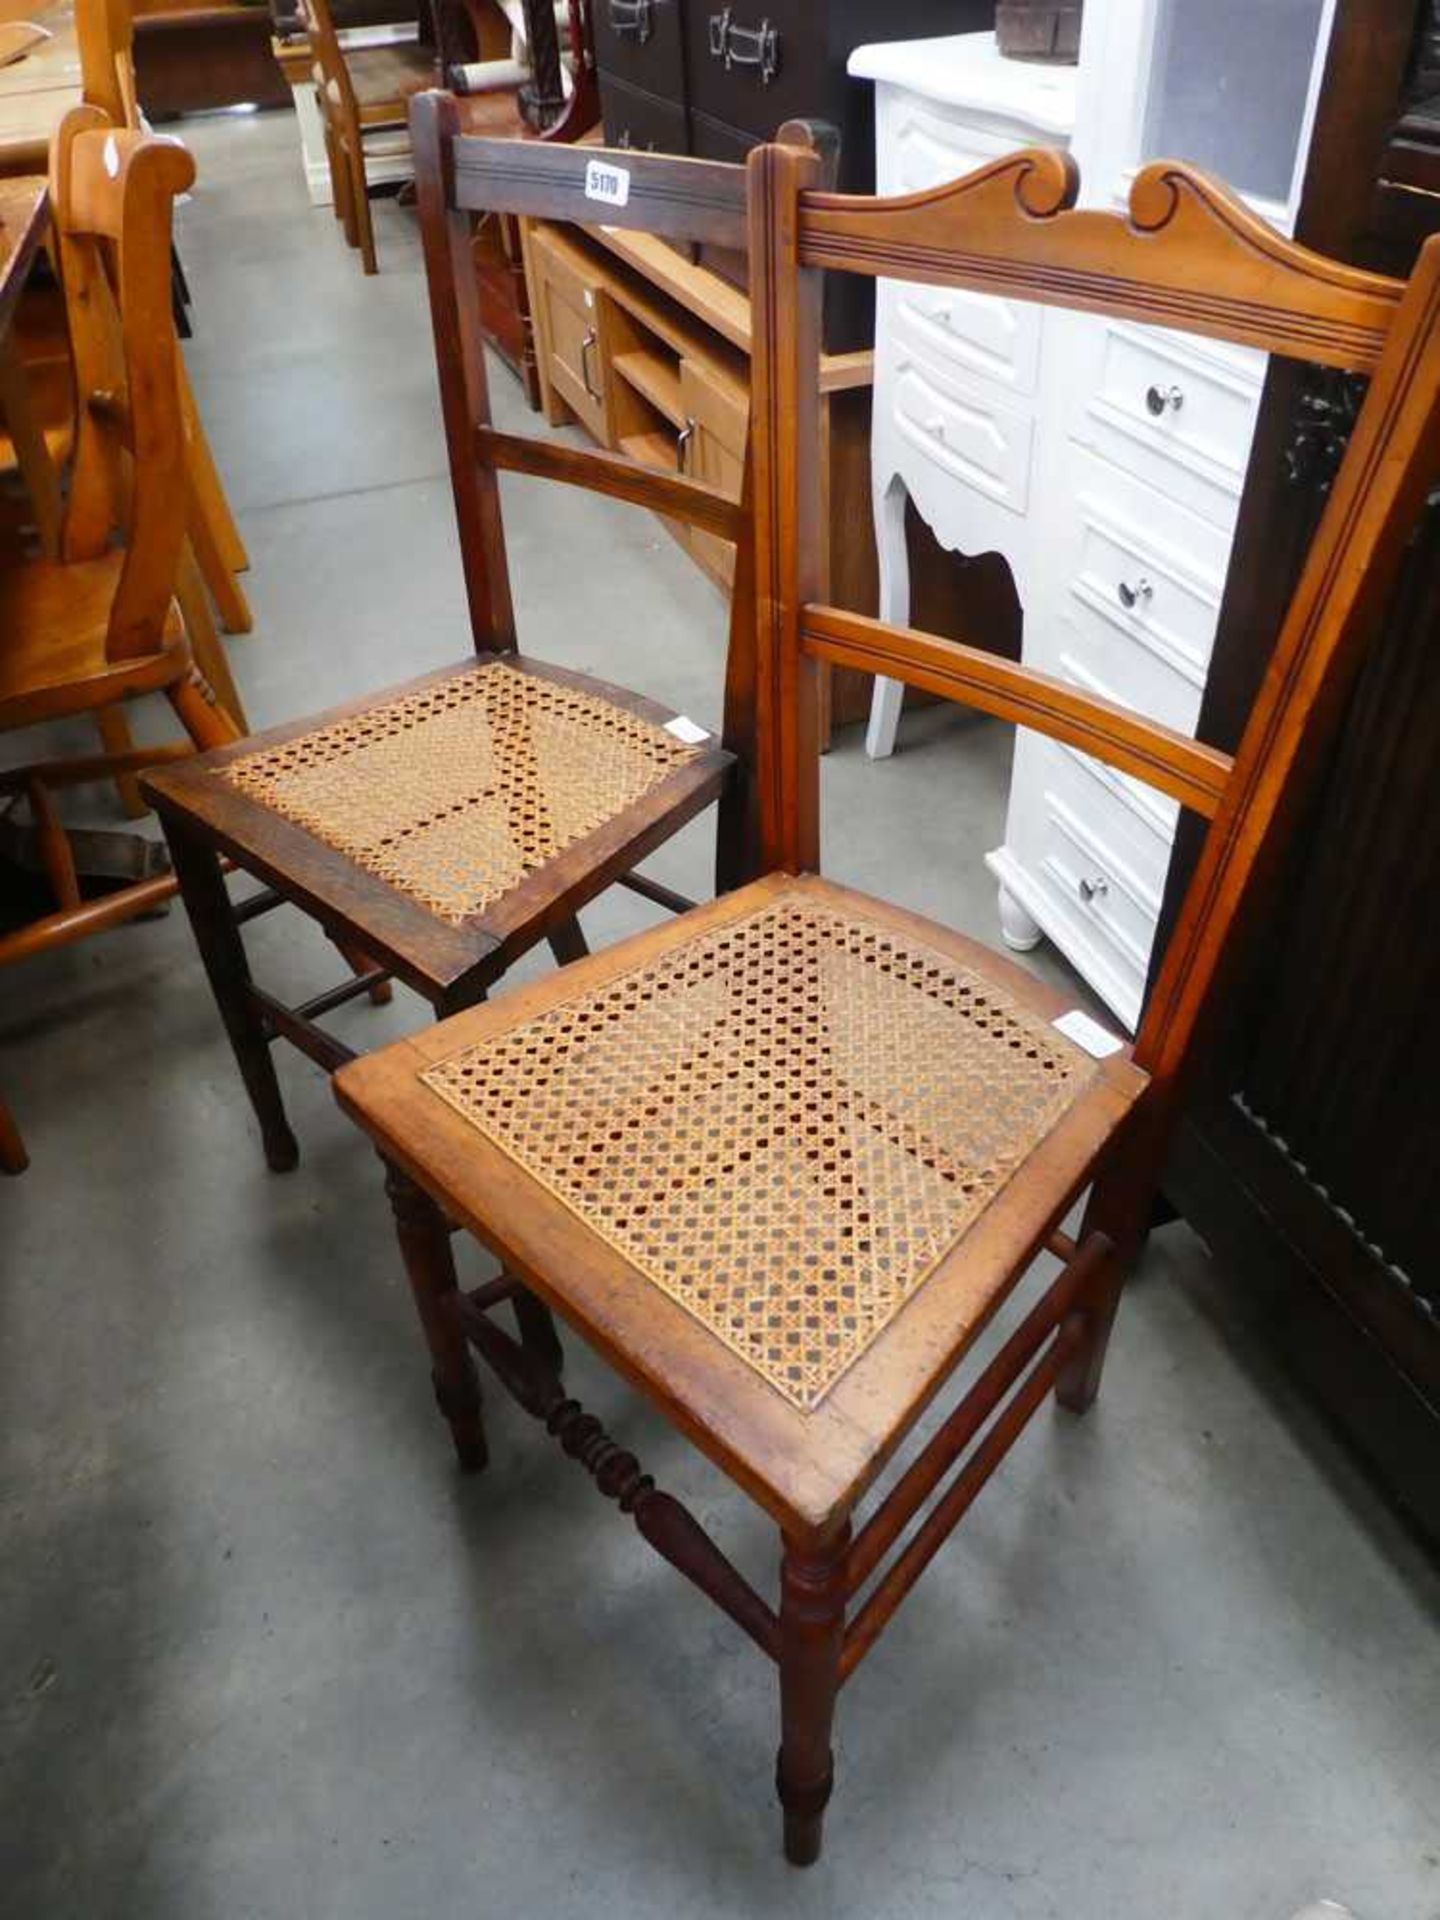 2 wicker seated bedroom chairs plus elm seated slatback chair